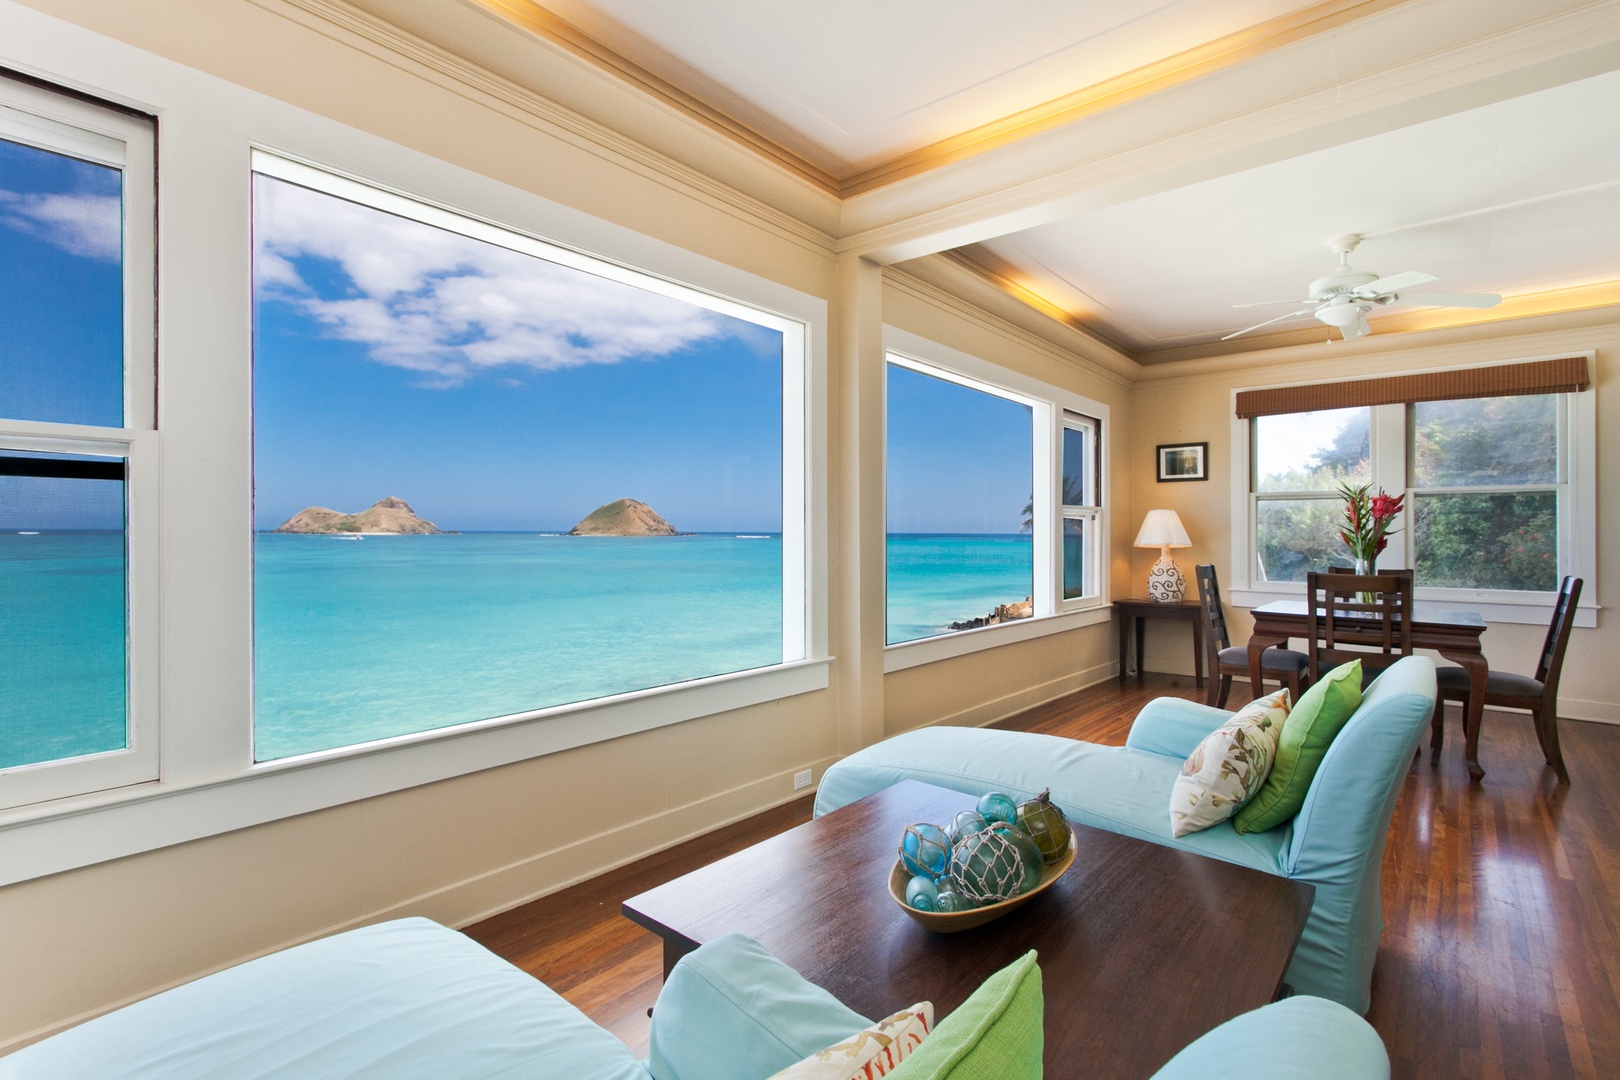 Kailua Vacation Rentals, Lanikai Village* - Gather at Hale Mahina Lanikai, your oceanfront luxury retreat.